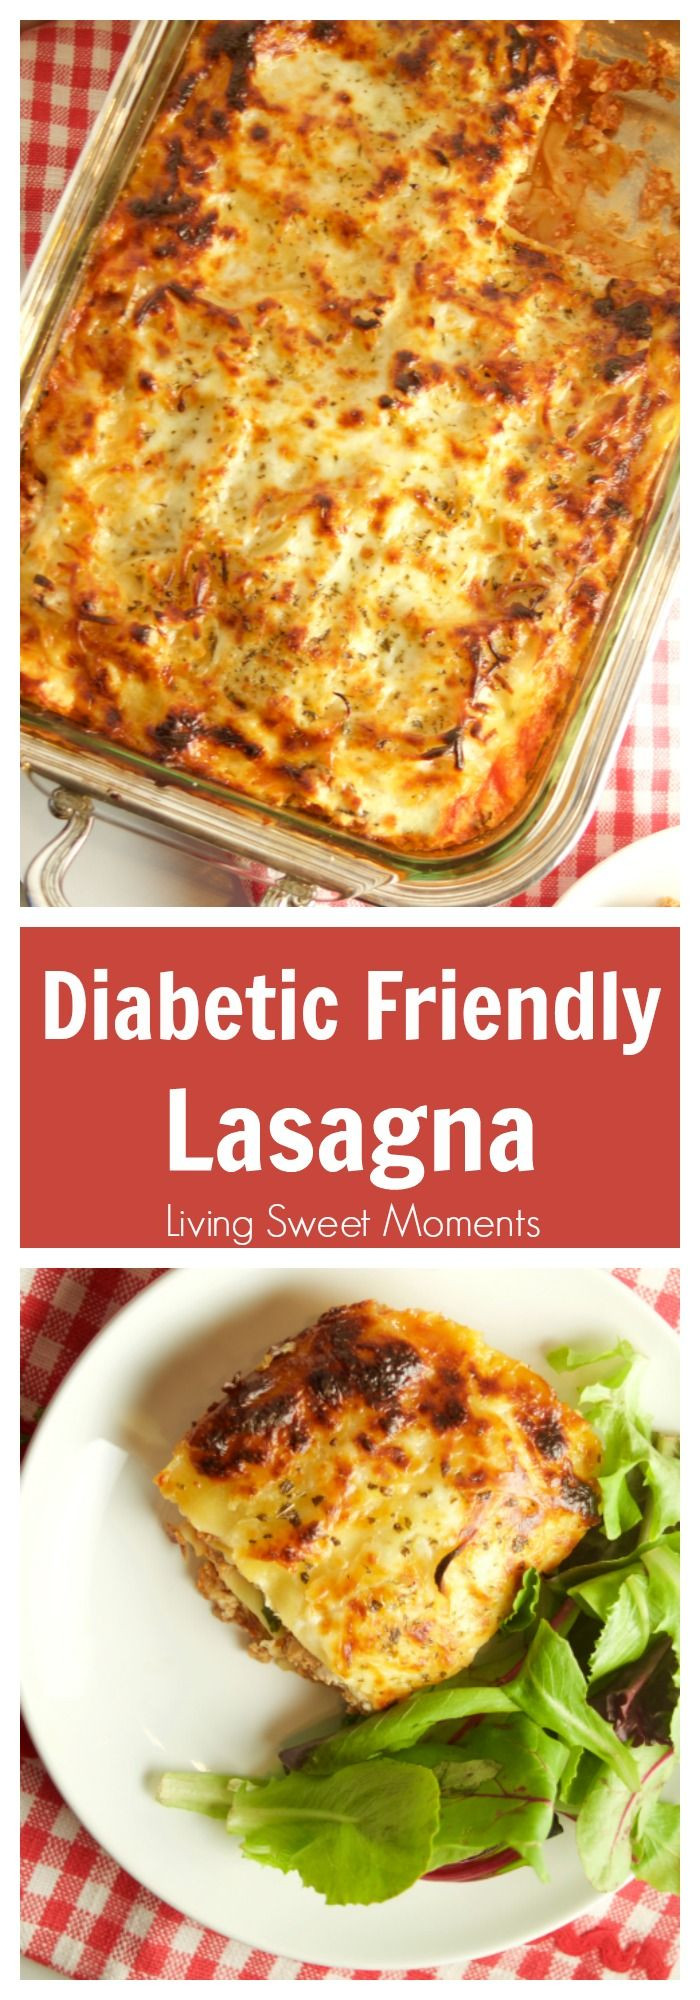 Diabetic Meals Recipes
 100 Diabetic Dinner Recipes on Pinterest